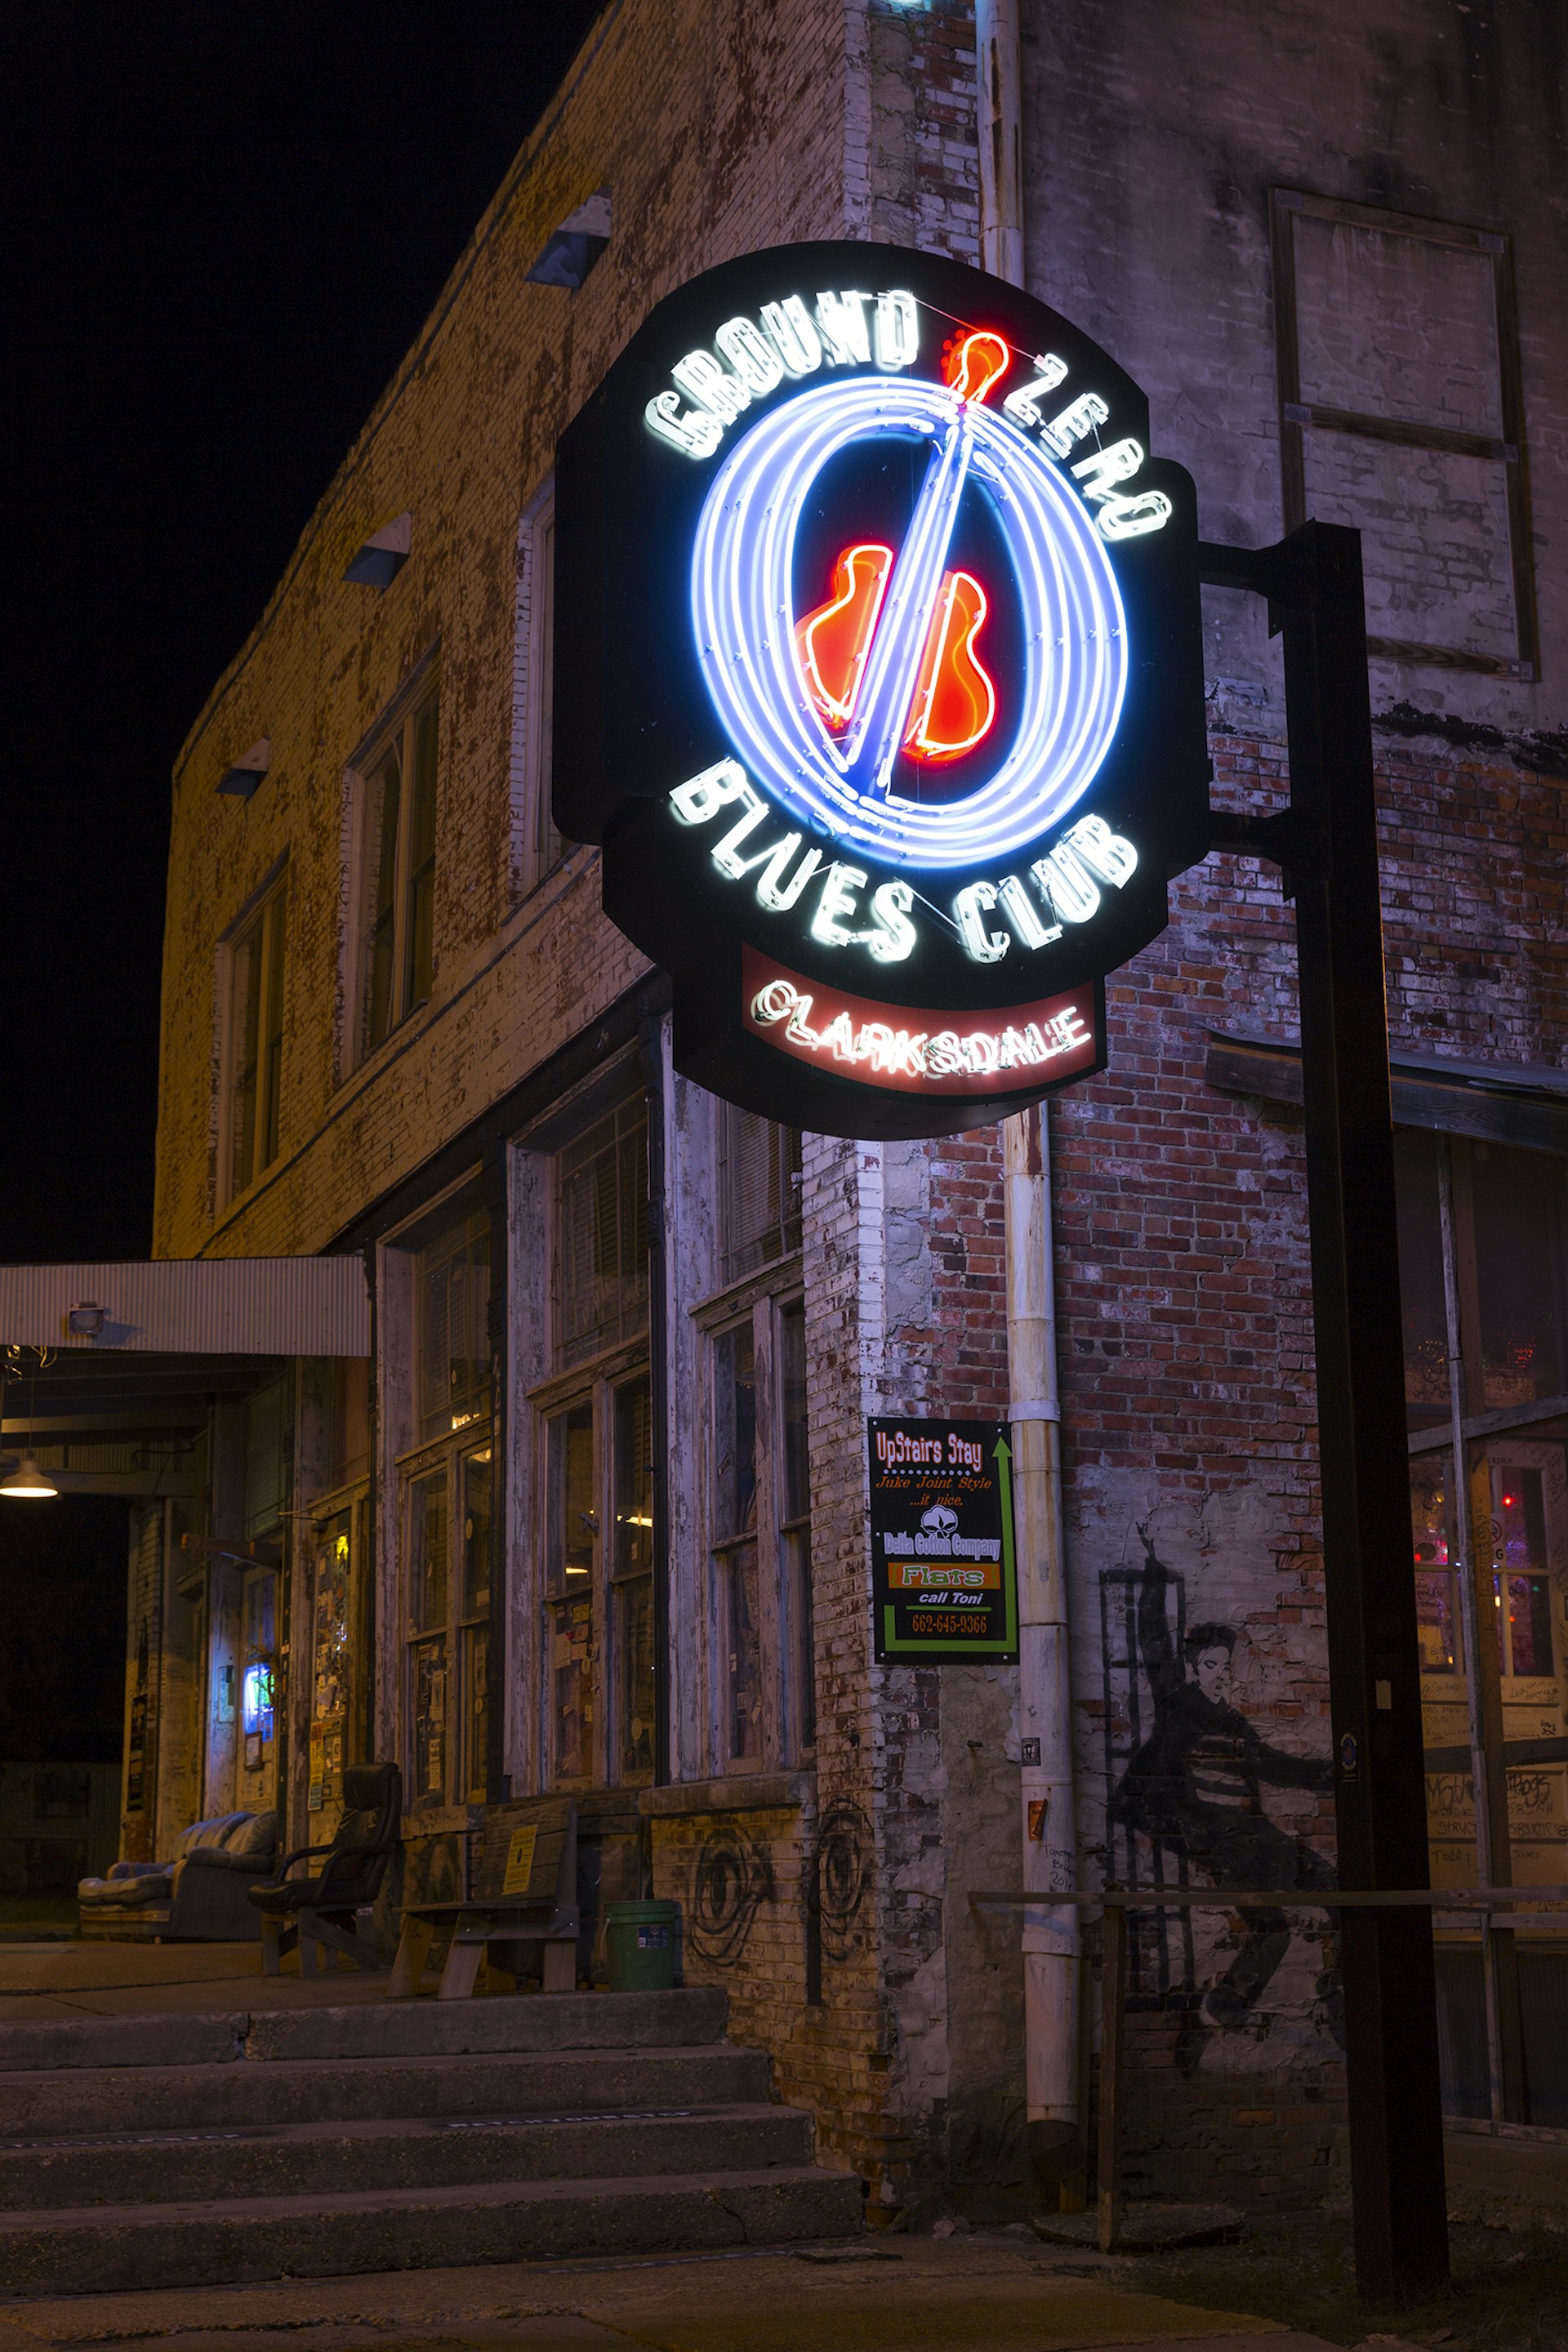 Ground Zero Blues Club, Mississippi, USA